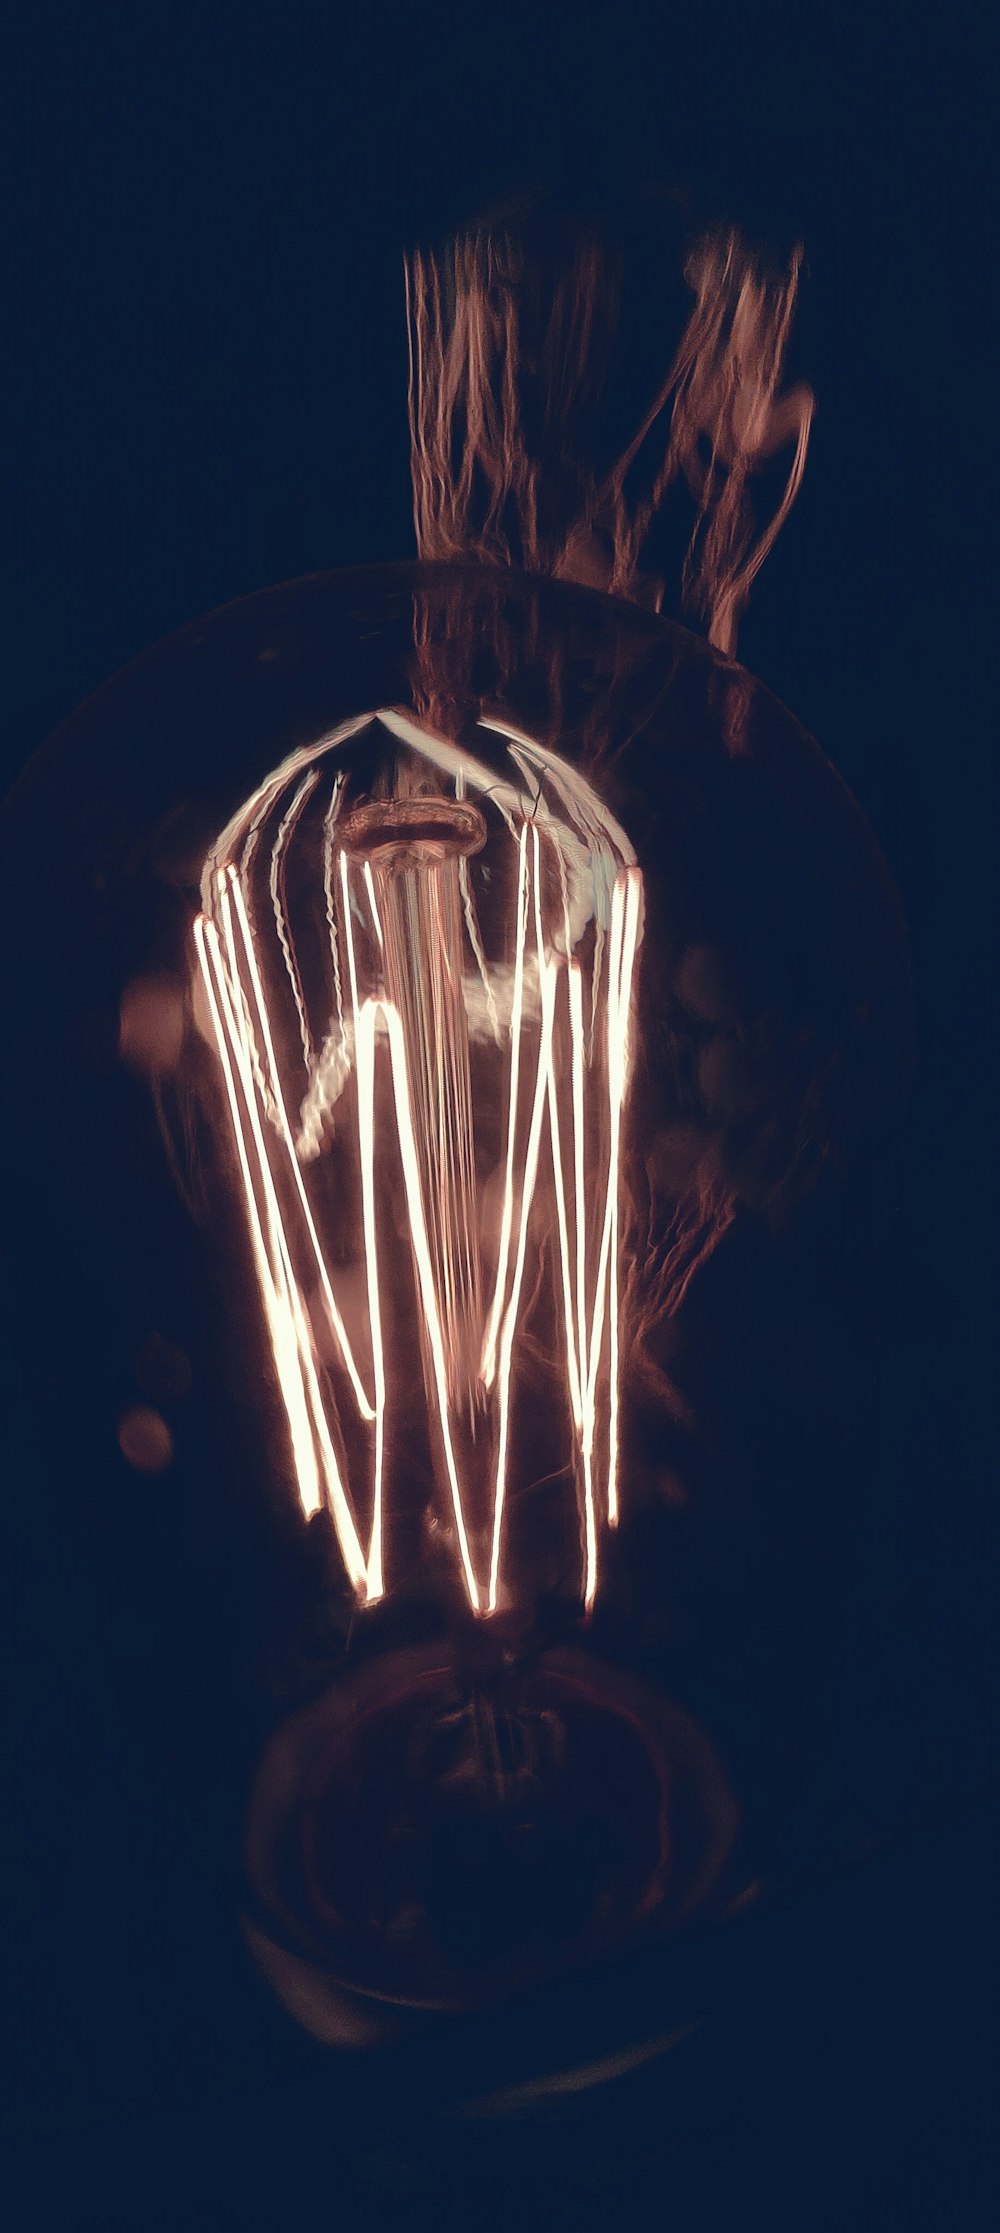 a blurry photo of a light bulb in the dark